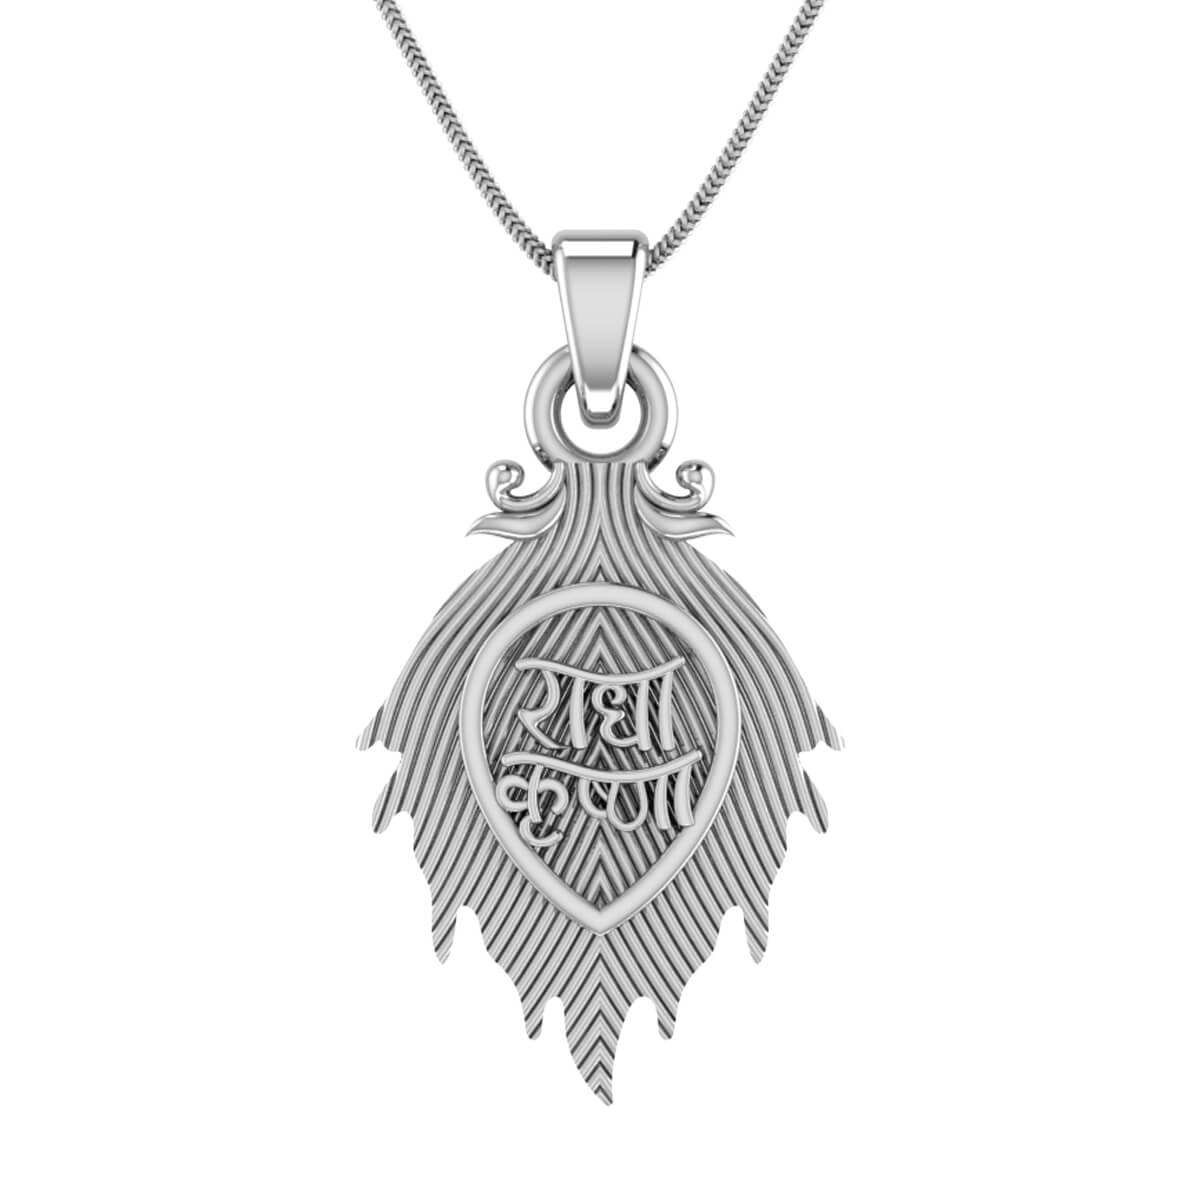 Shri Radha krishna Silver Locket with chain